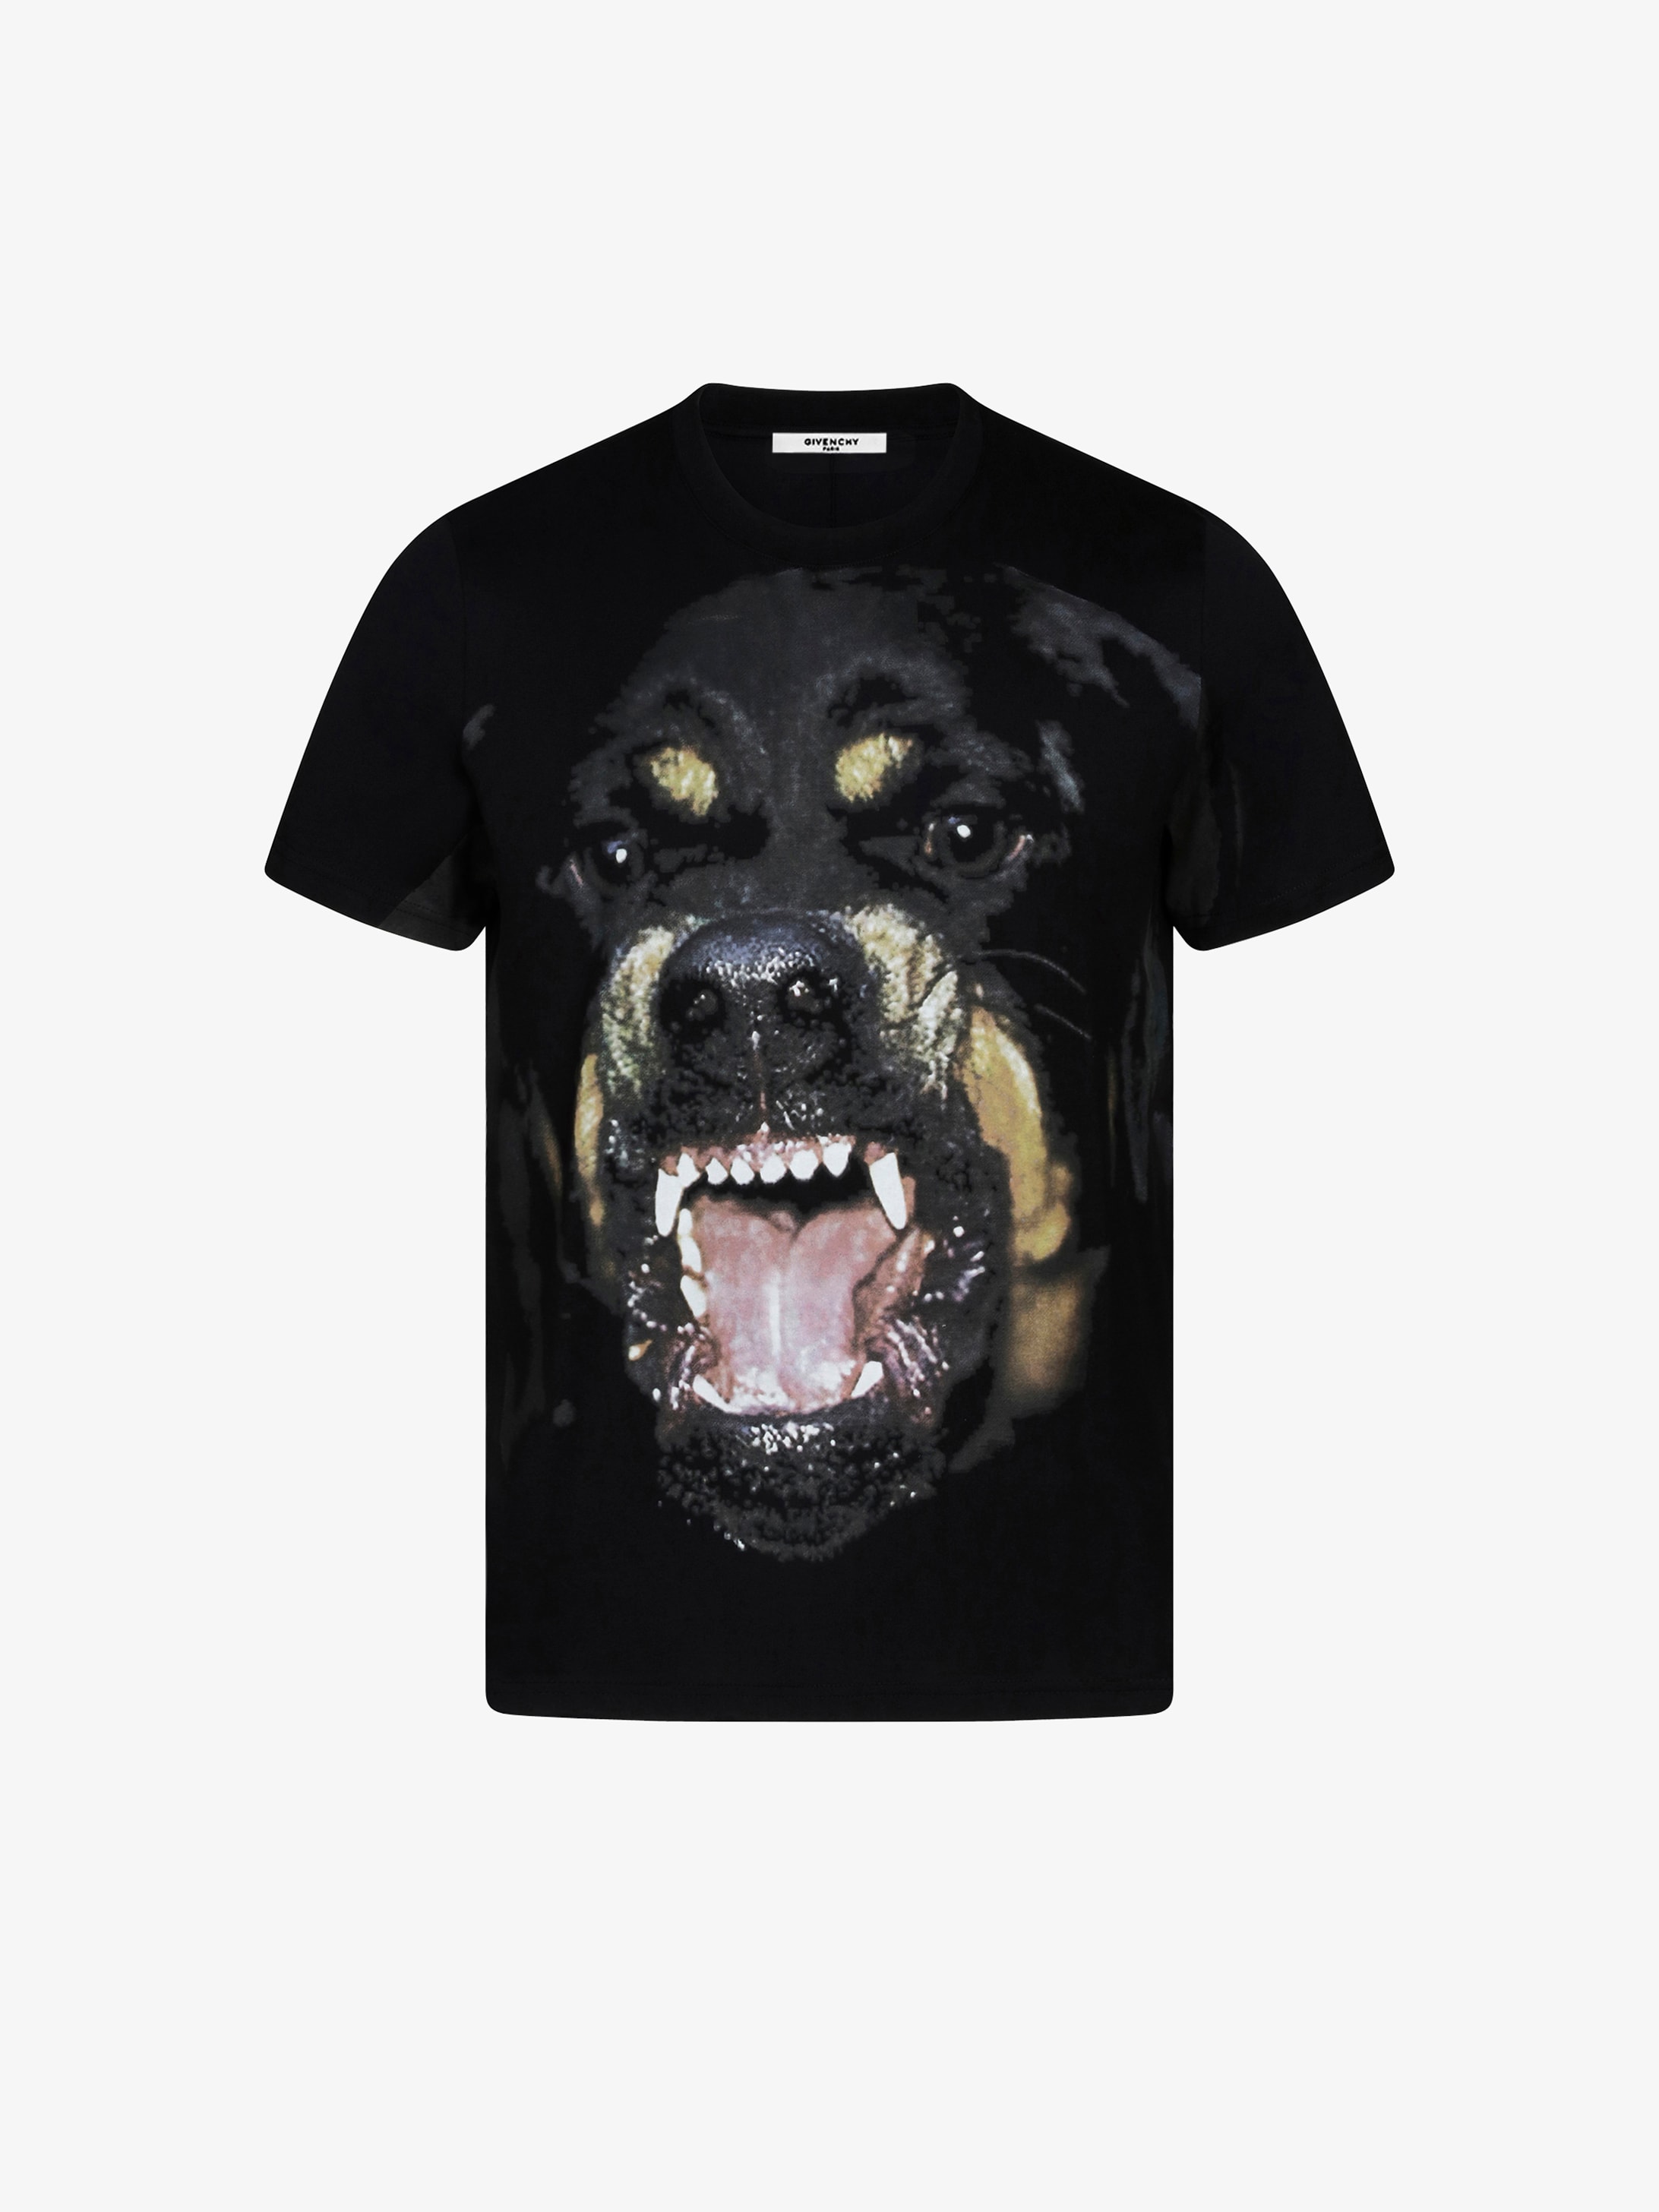 Givenchy Rottweiler printed T-shirt | GIVENCHY Paris